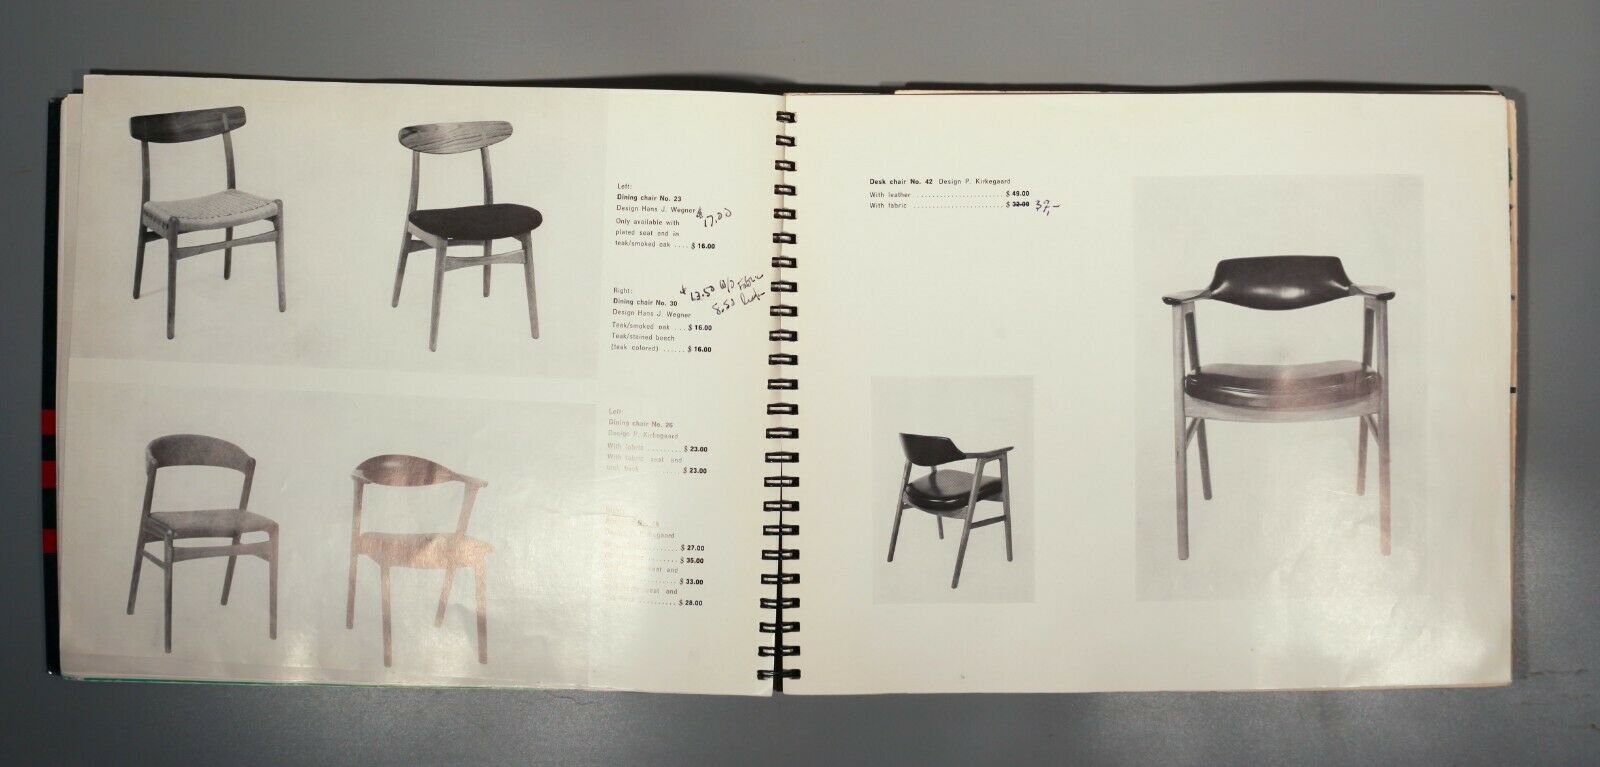 1593243879-anton-dam-catalogue-P-kikegaard-chairs-mystery.jpg